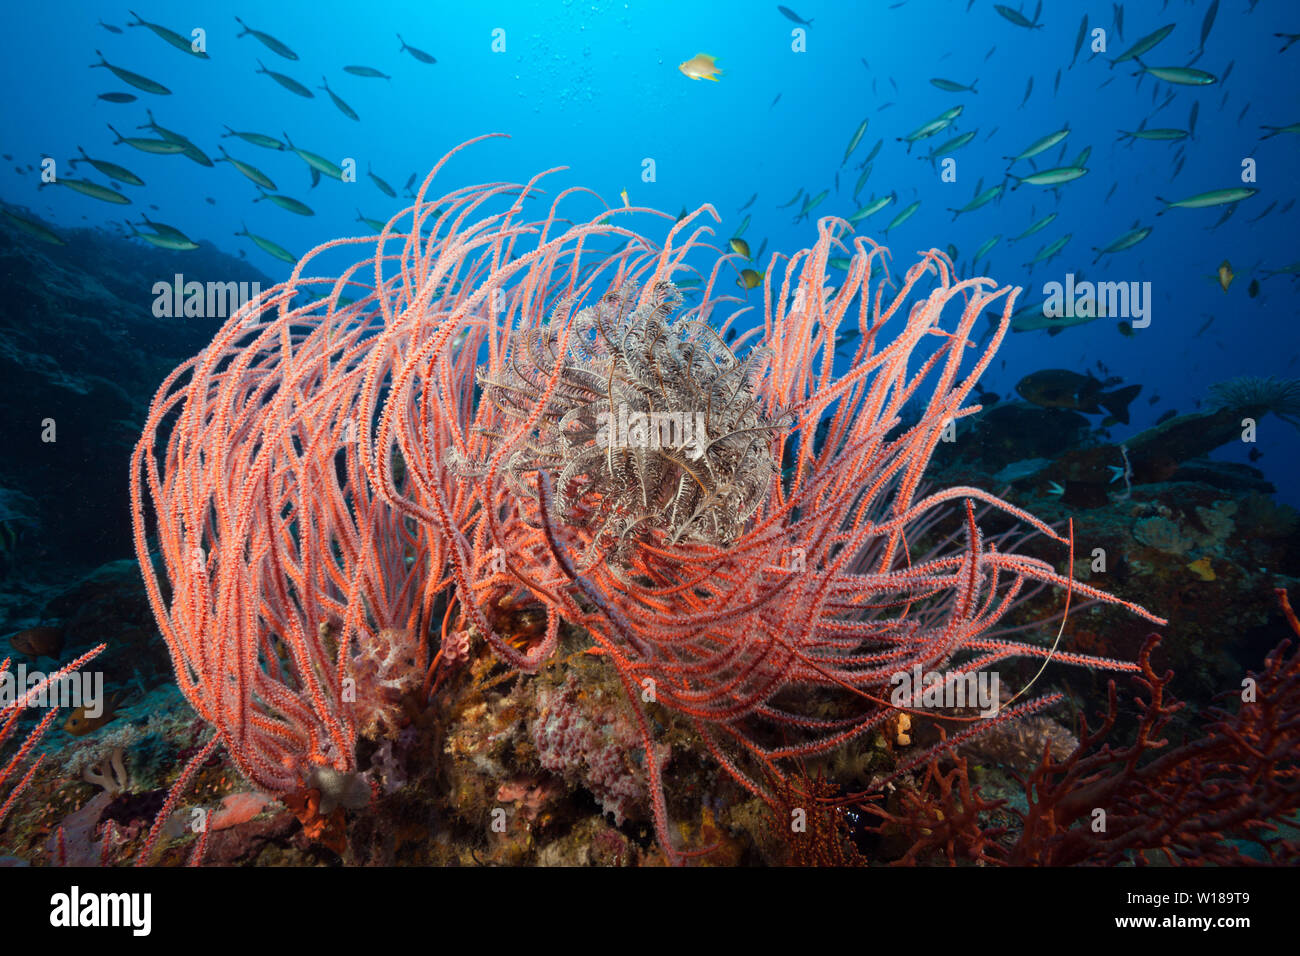 Whip Coral in Coral Reef, Ellisella ceratophyta, Tufi, Solomon Sea, Papua New Guinea Stock Photo